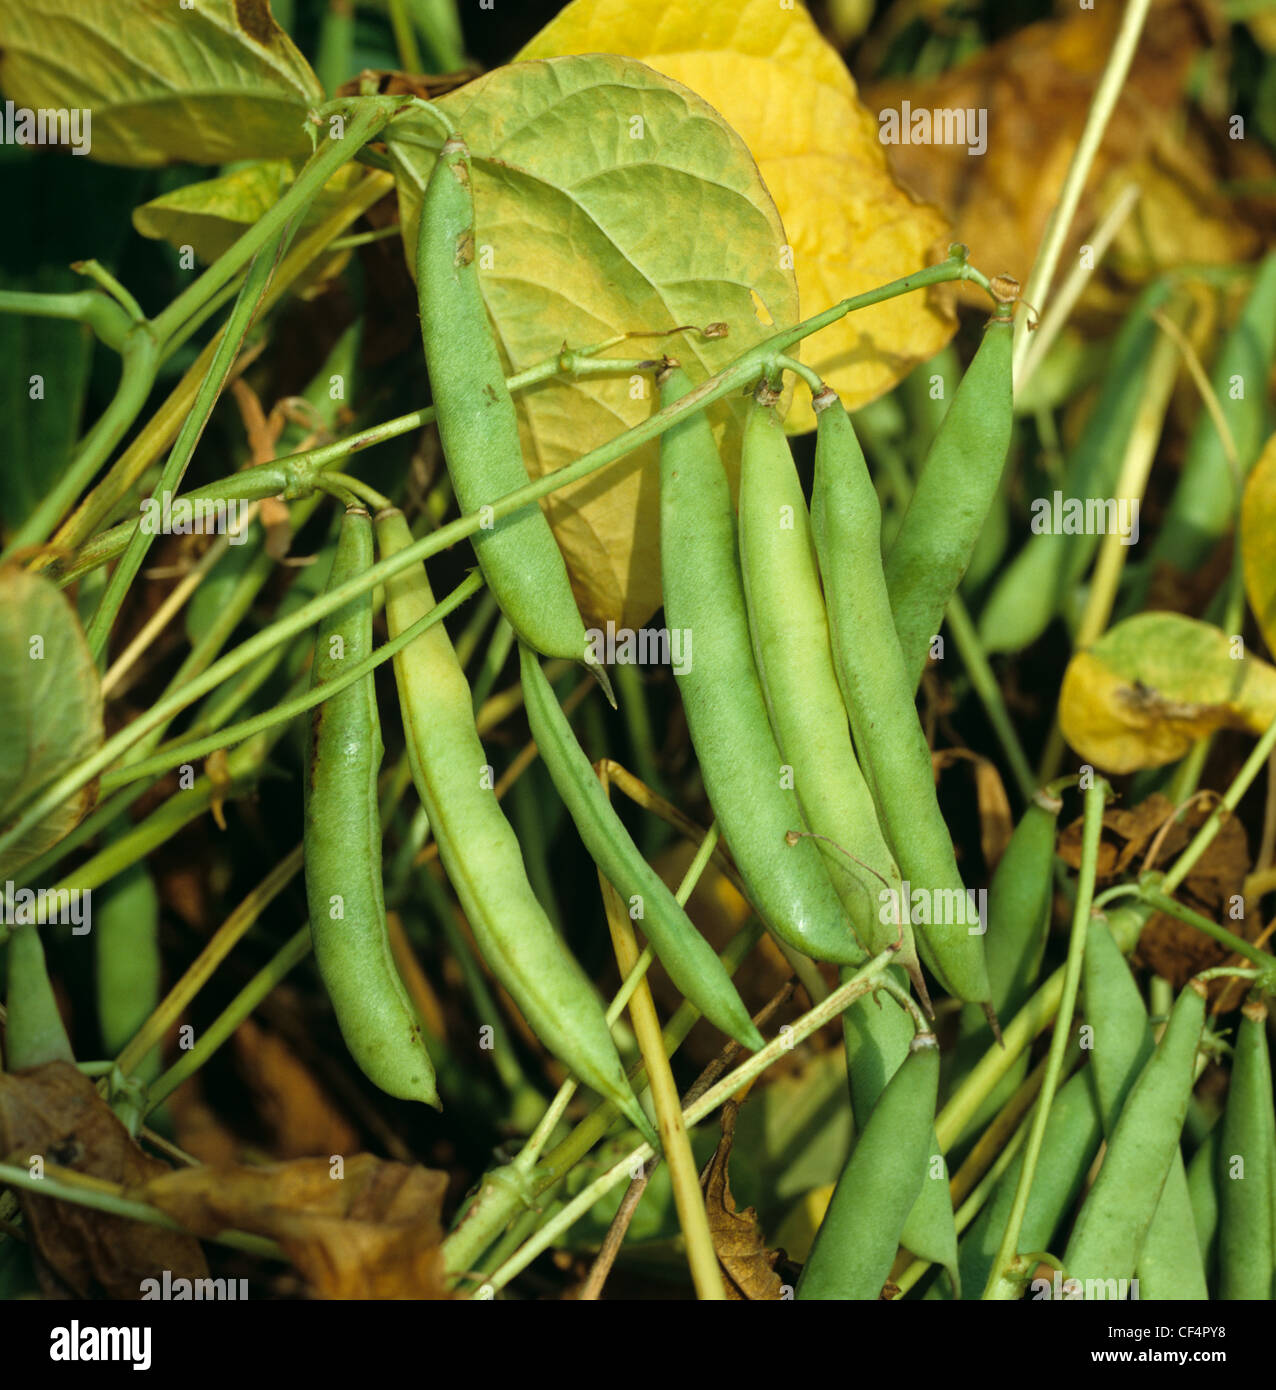 Navy or haricot bean pods variety Albion (Phaseolus vulgaris) Stock Photo